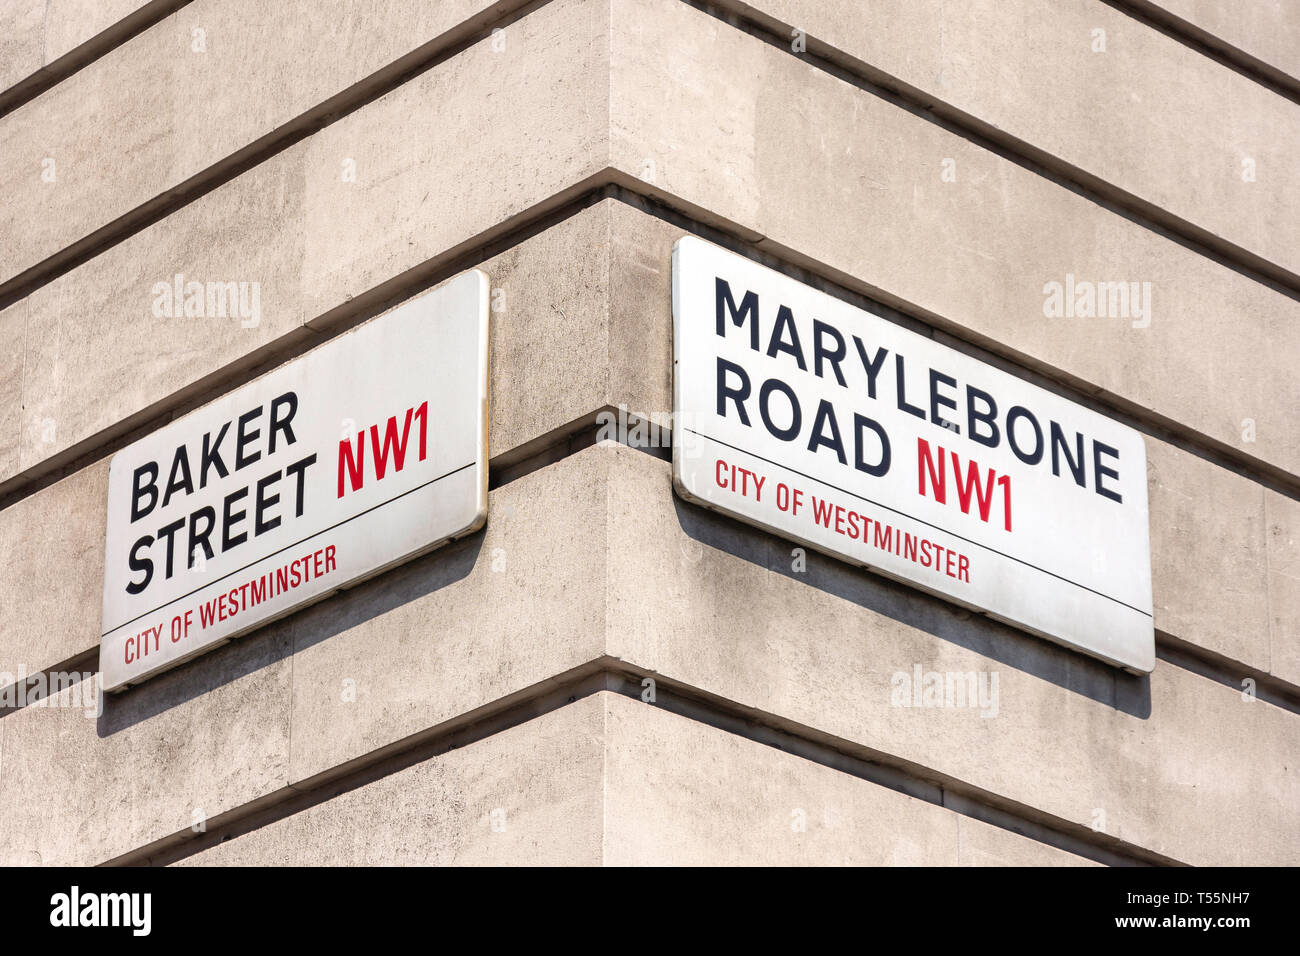 Baker Street and Marylebone Road street signs, Marylebone, City of Westminster, Greater London, England, United Kingdom Stock Photo